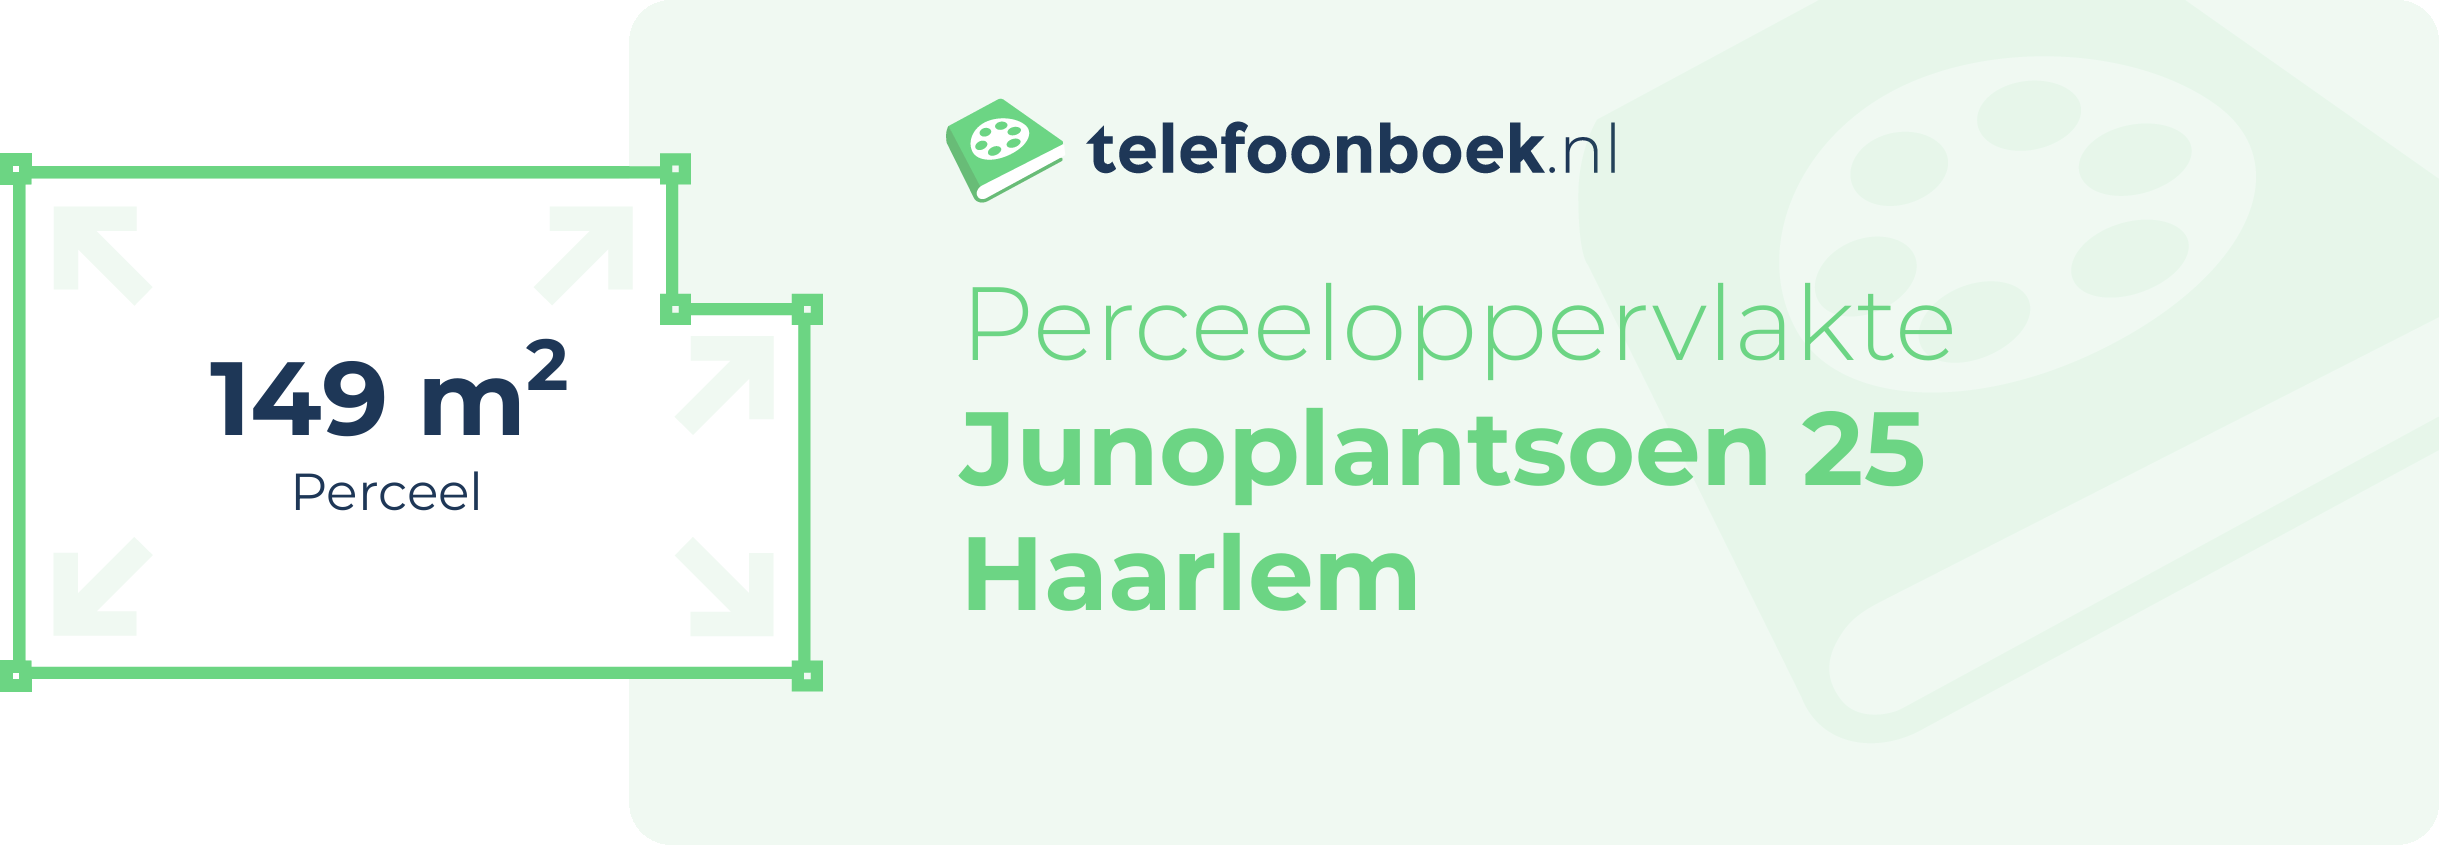 Perceeloppervlakte Junoplantsoen 25 Haarlem